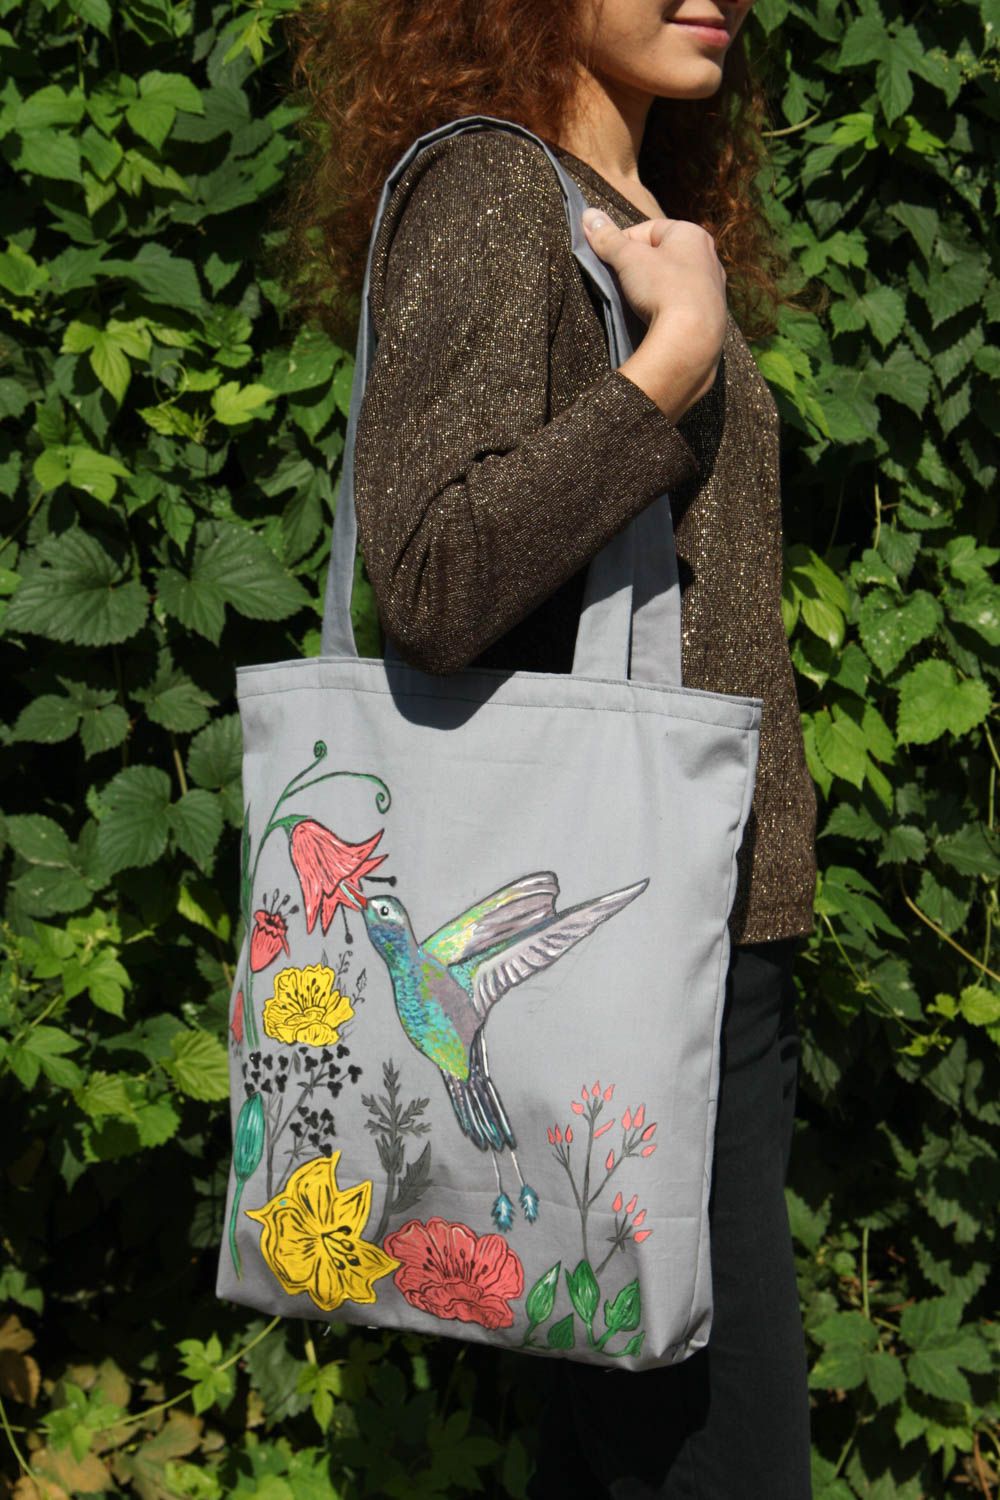 Handmade bag handbags for women fashion handbags designer accessories gift ideas photo 5